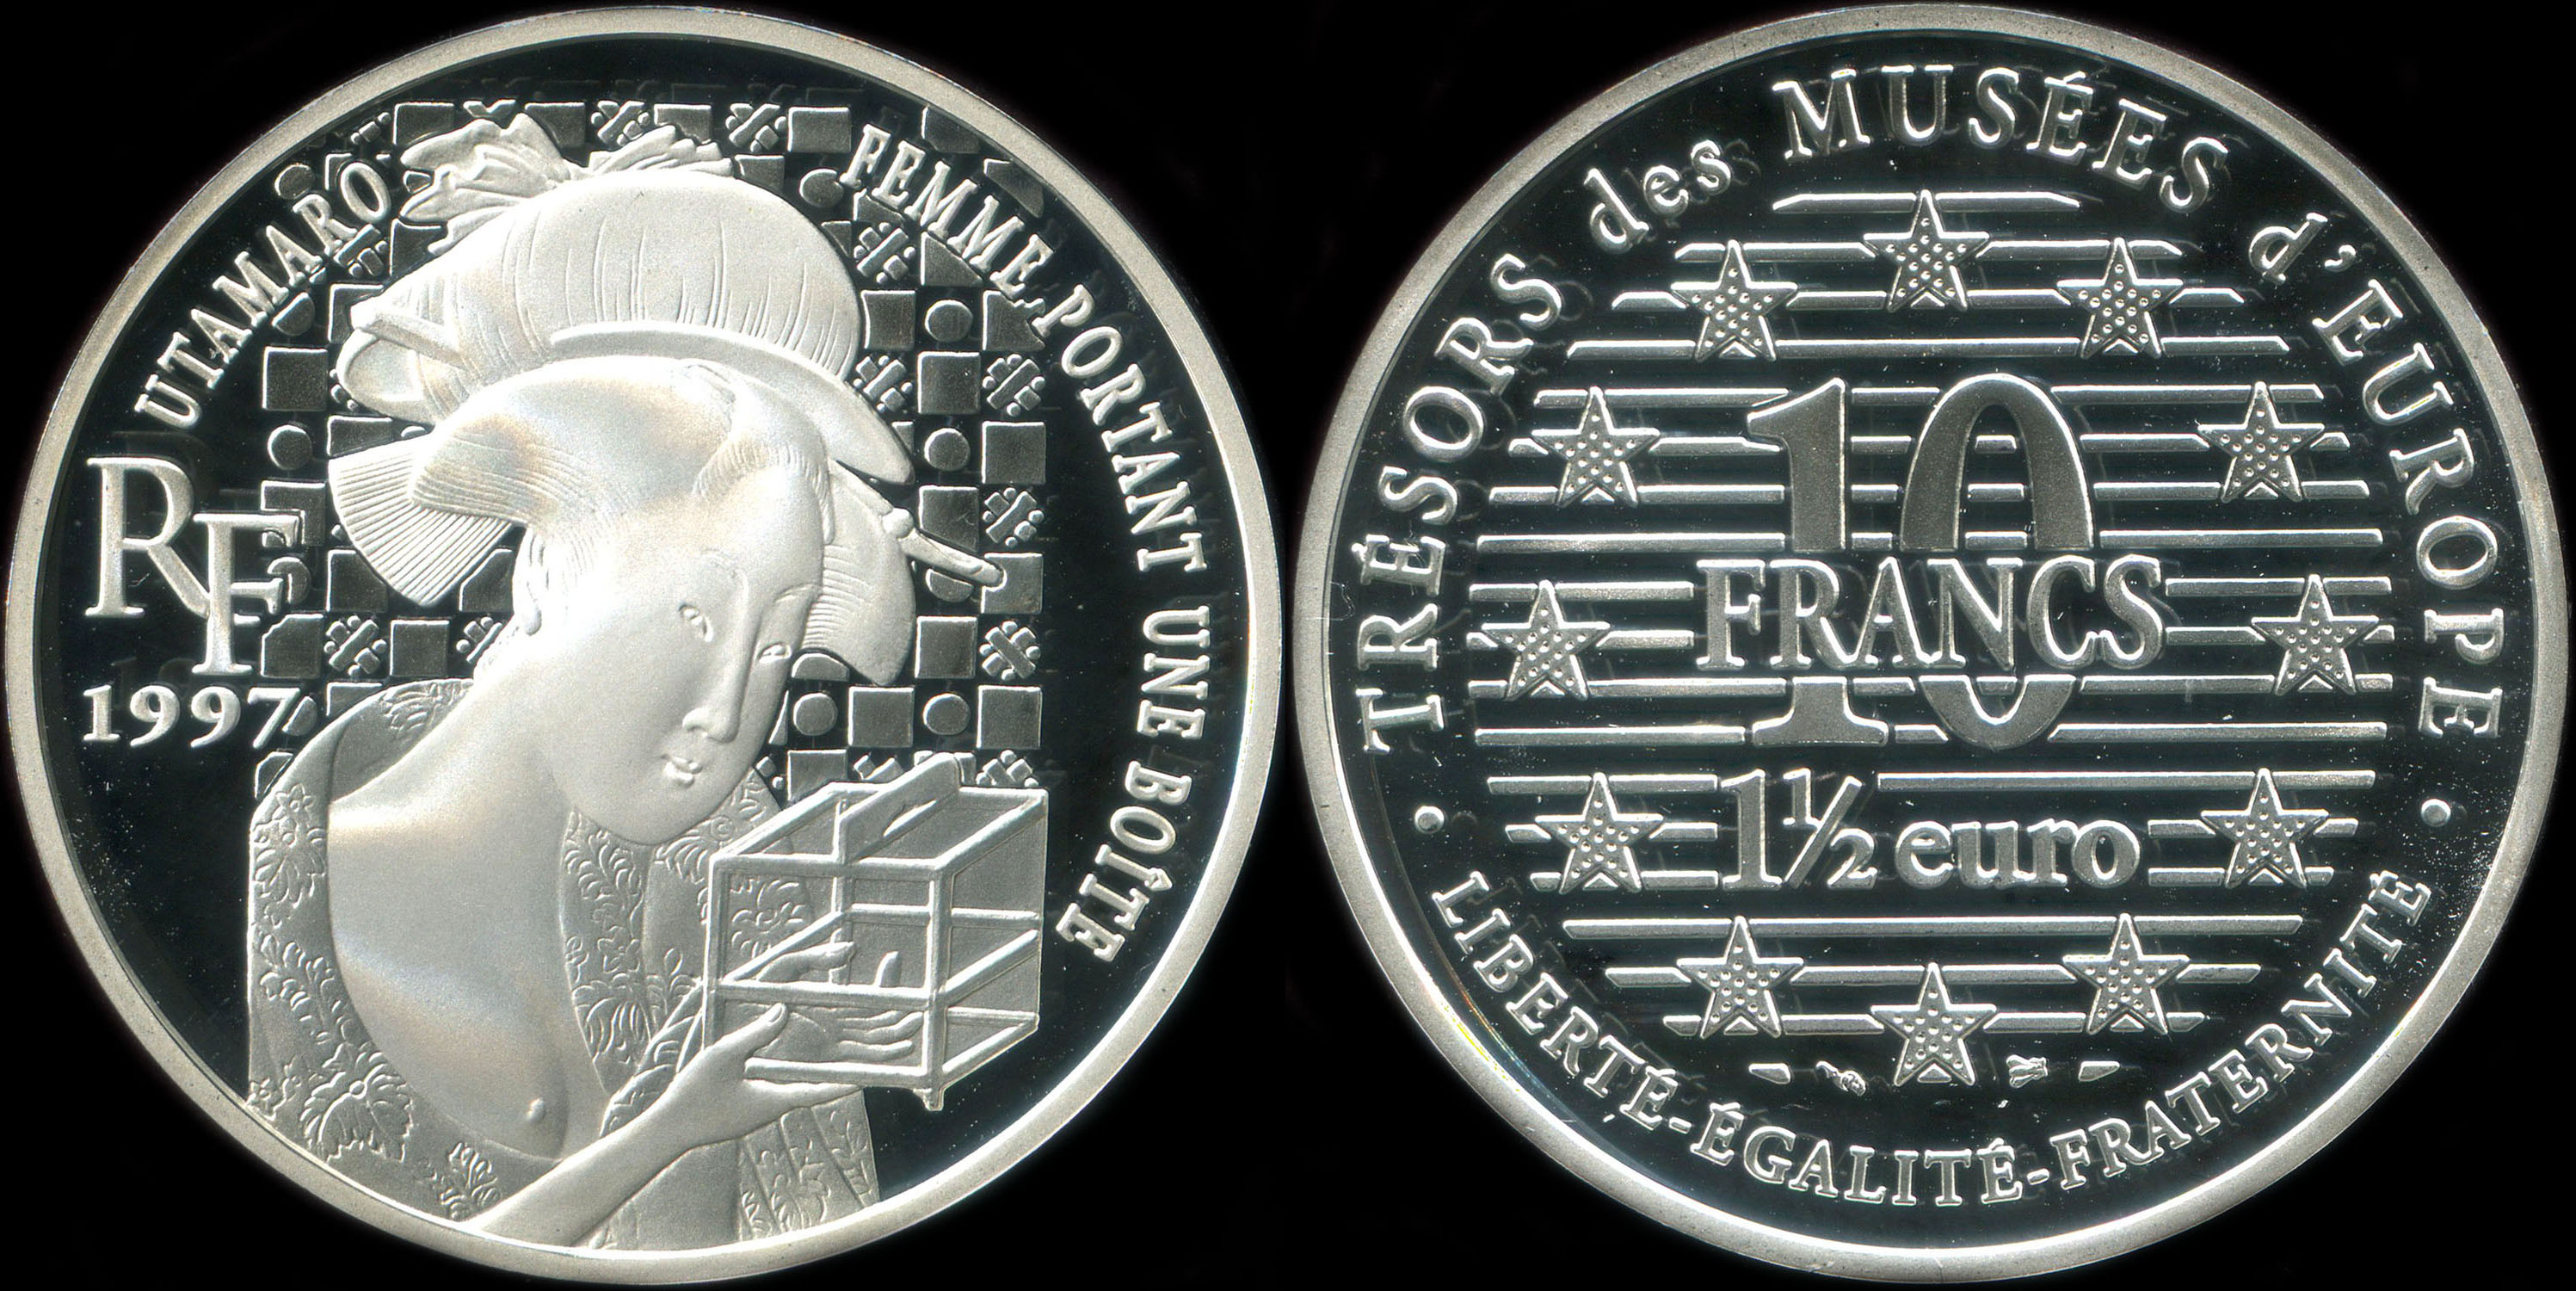 Pice de 10 francs - 1  euro 1997 - Trsors des Muses d'Europe - Femme  la Bote par Kitagawa Utamaro (Muse Guimet  Paris)